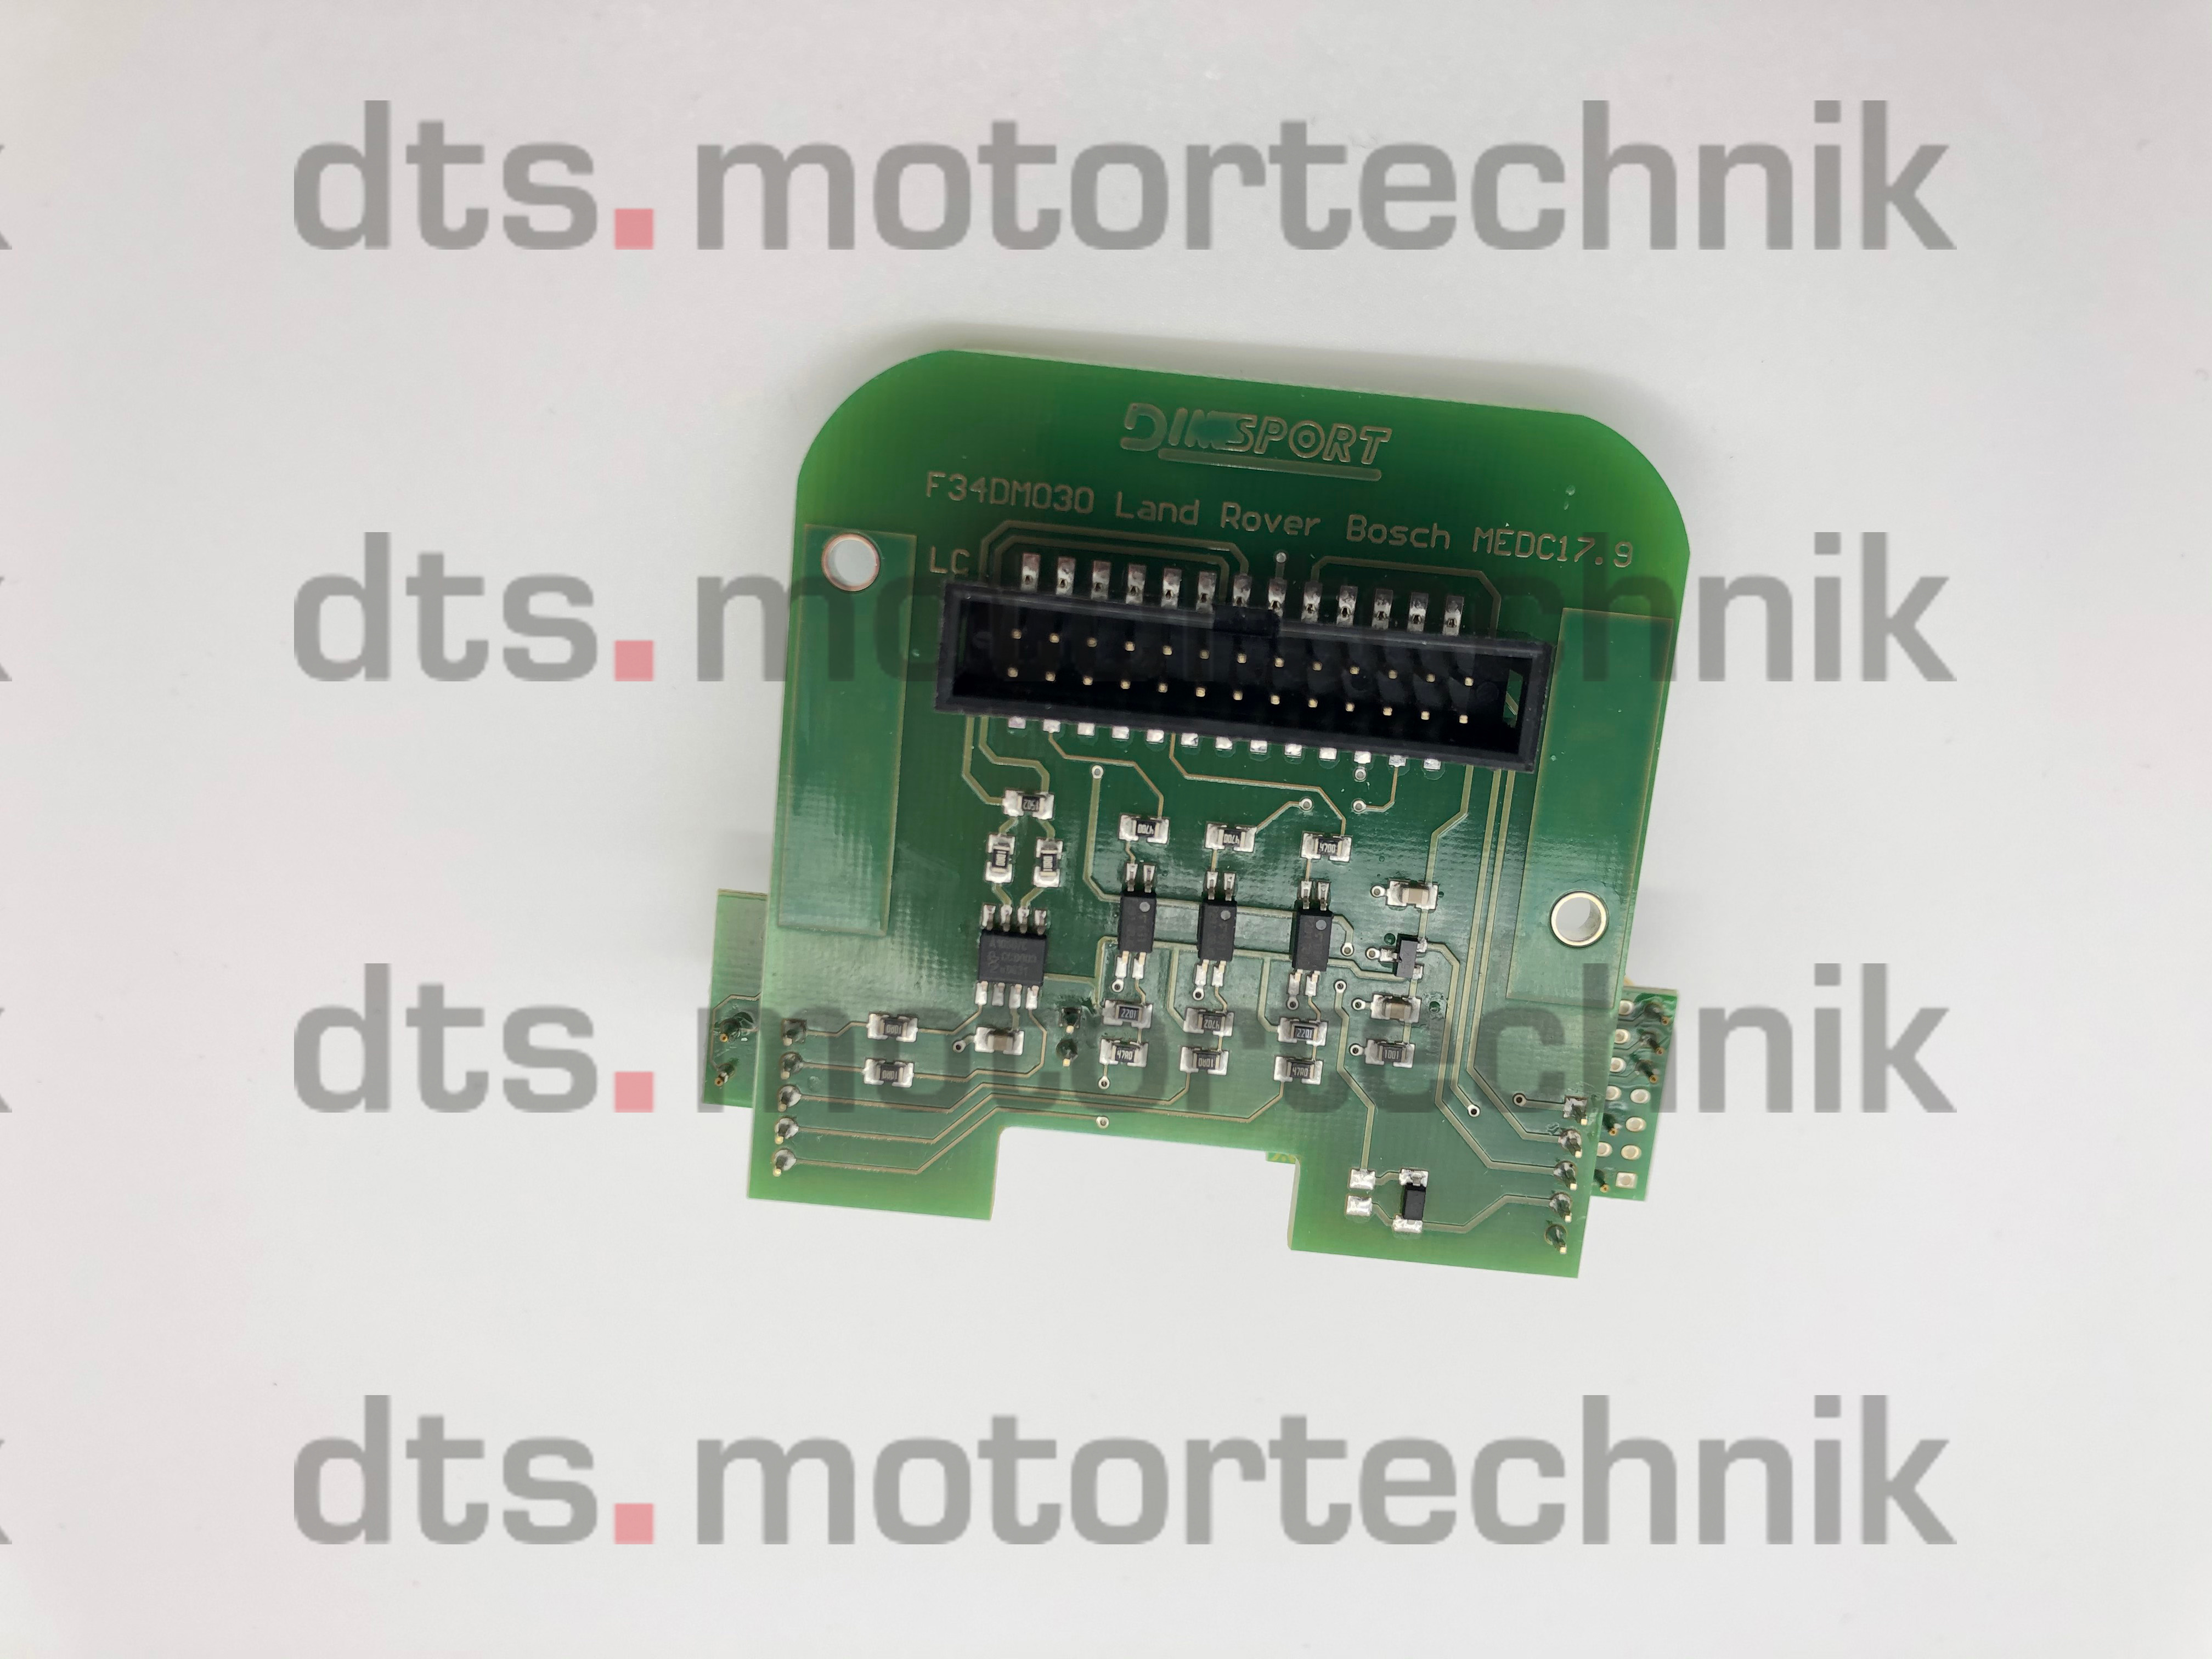 Bosch MEDC17.9 (Land Rover) - Infineon Tricore CPU Terminaladapter